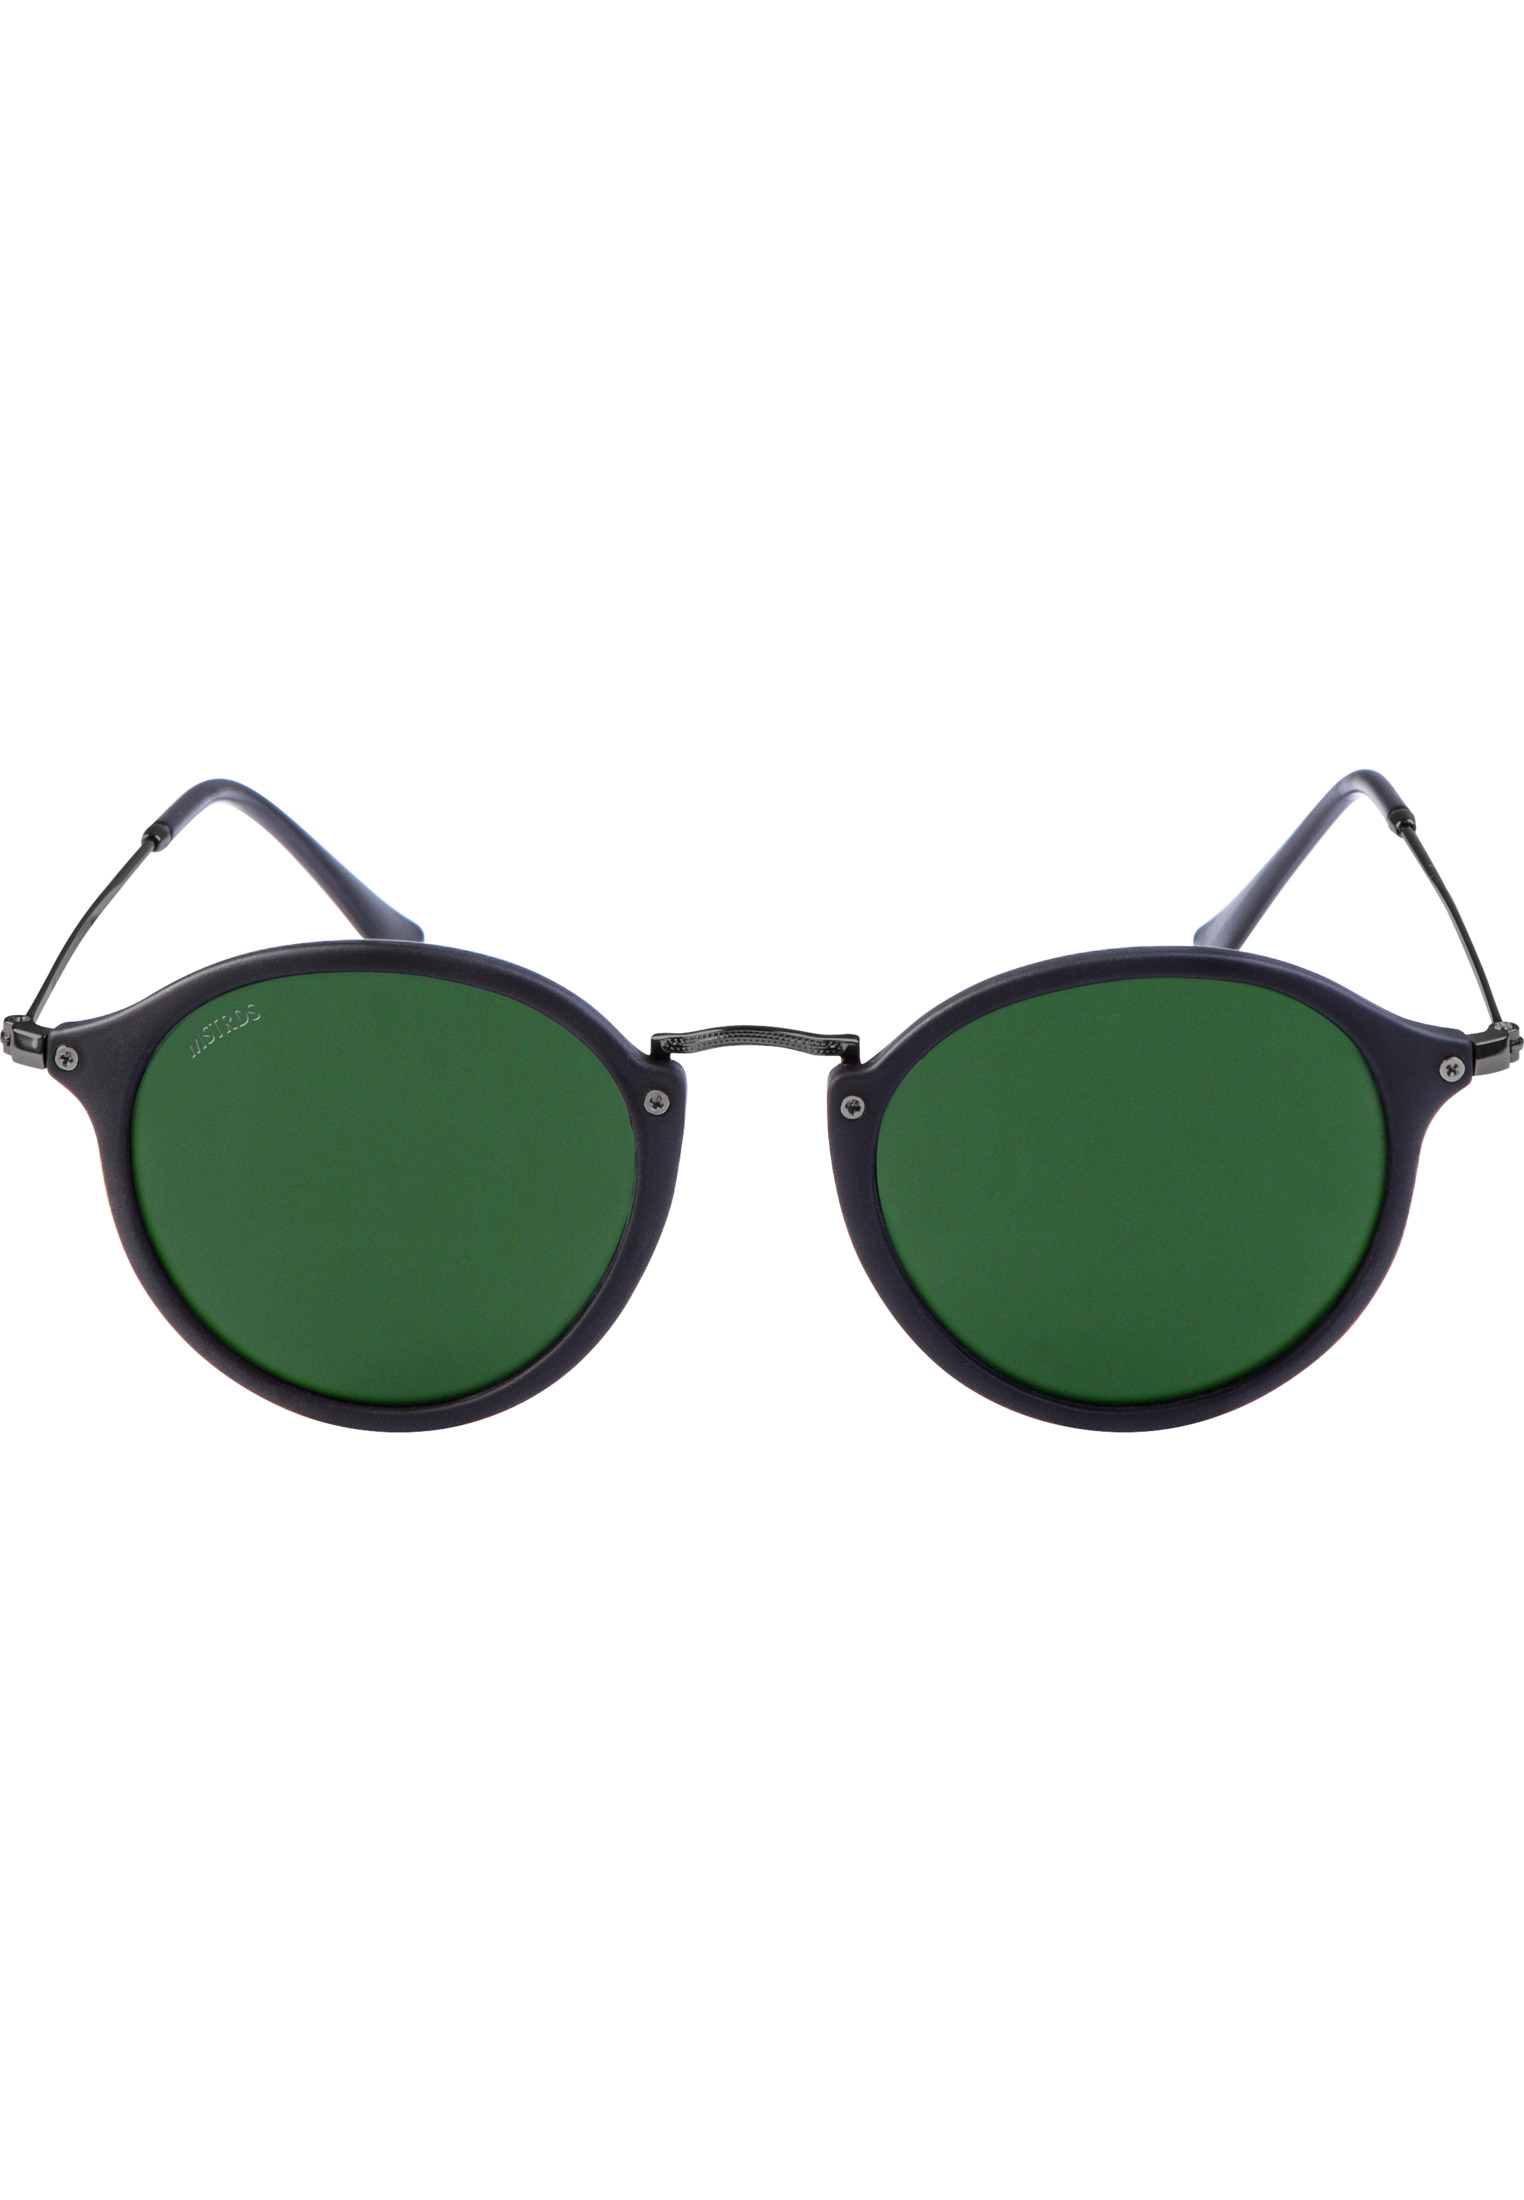 MSTRDS Herren Sonnenbrille Unisex | | Spy Sunglasses Accessoires Sonnenbrillen Ayazo 